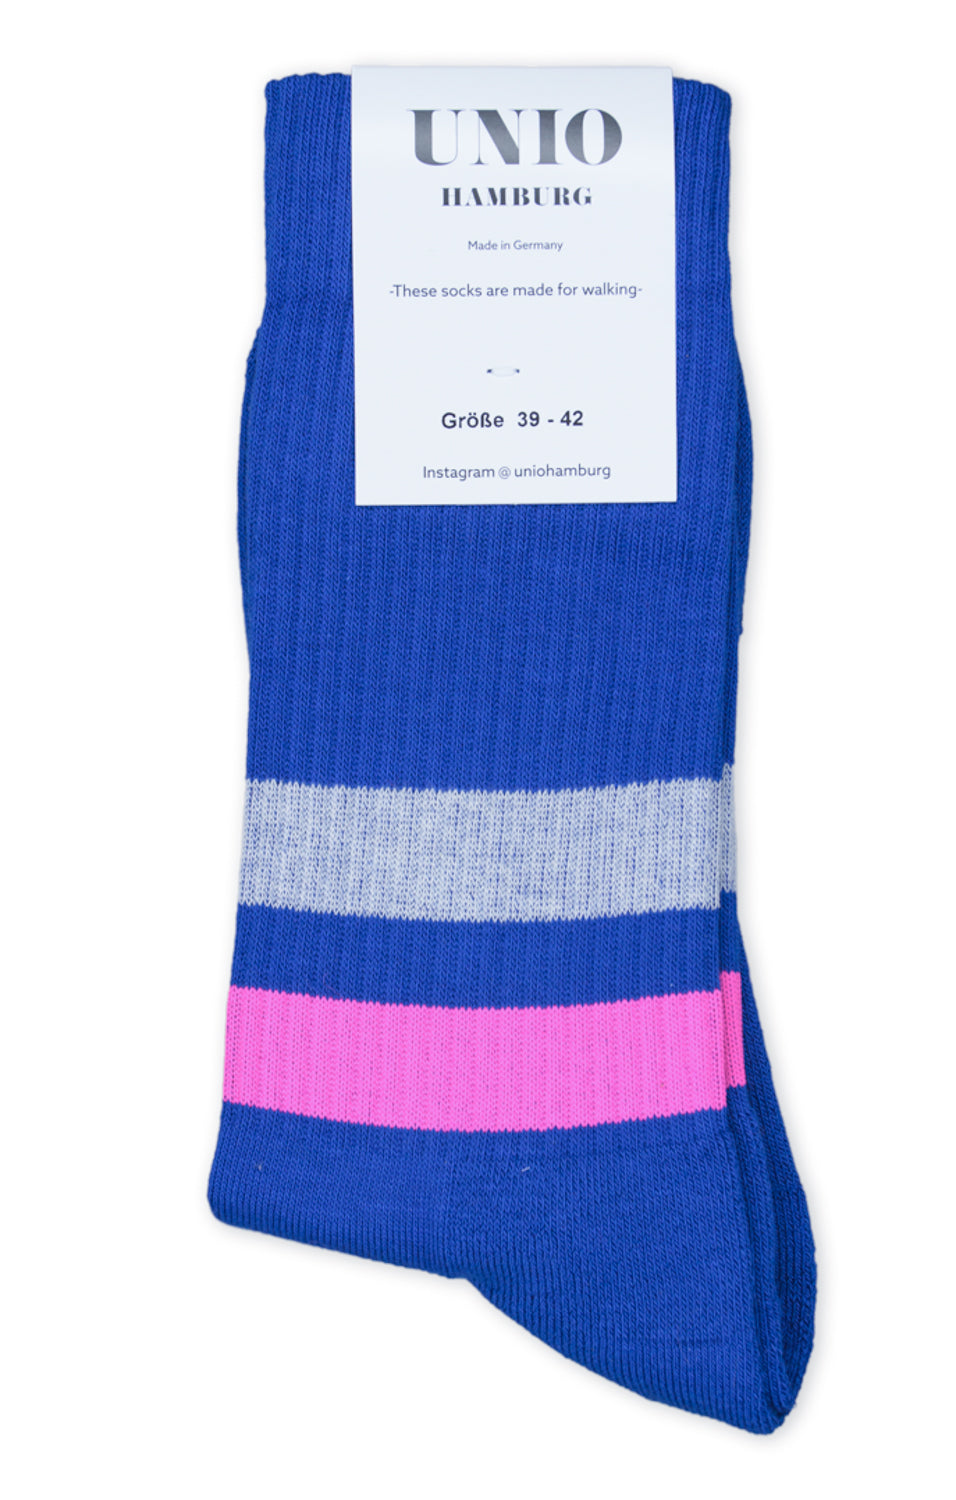 TENNIS - fresh blue / white / neon pink K15/43-46